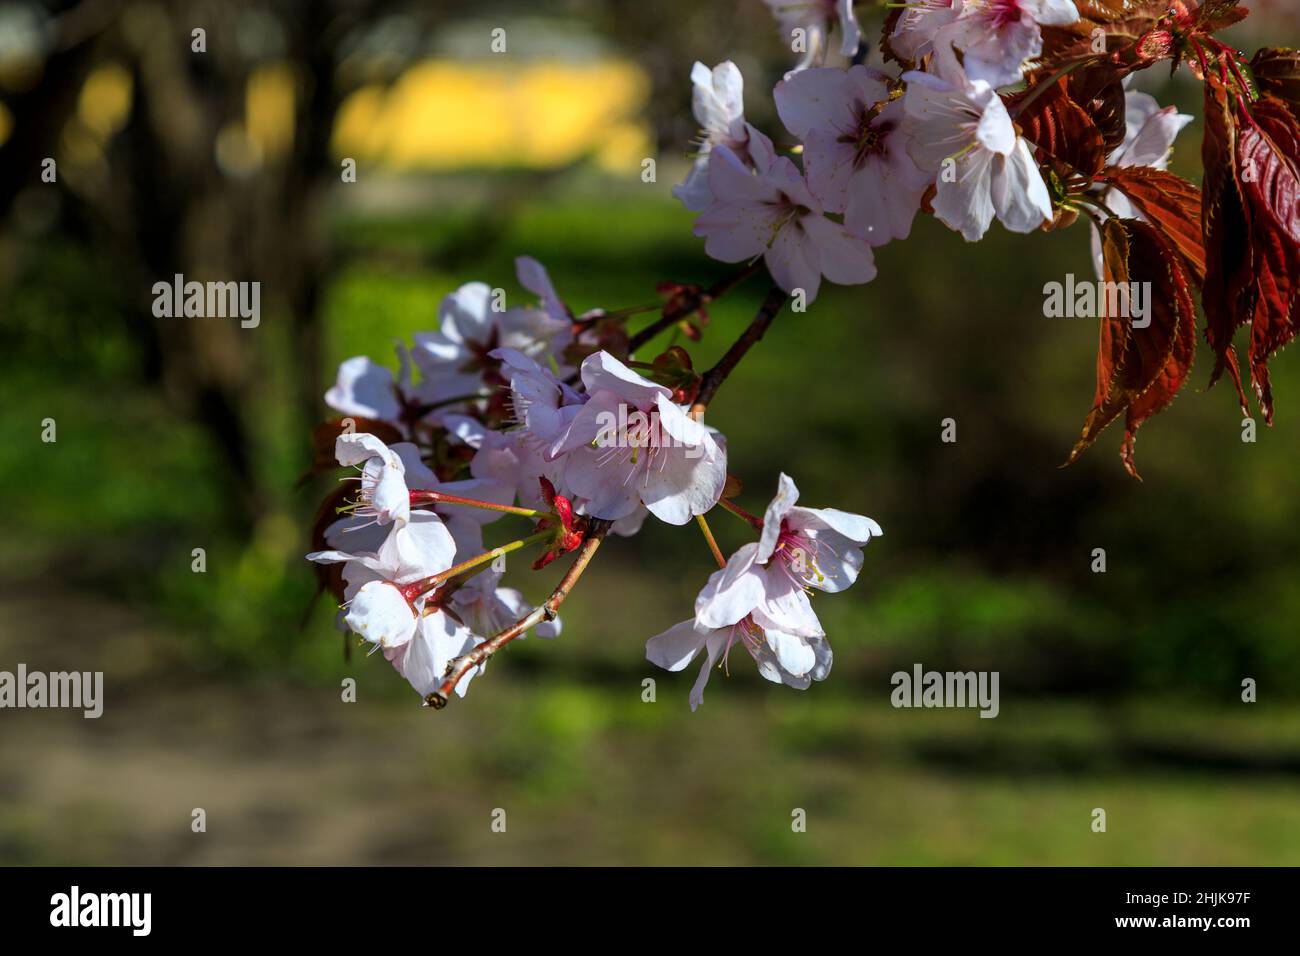 Cherry blossom branch in bloom. Sakura flowers on blurred background ...